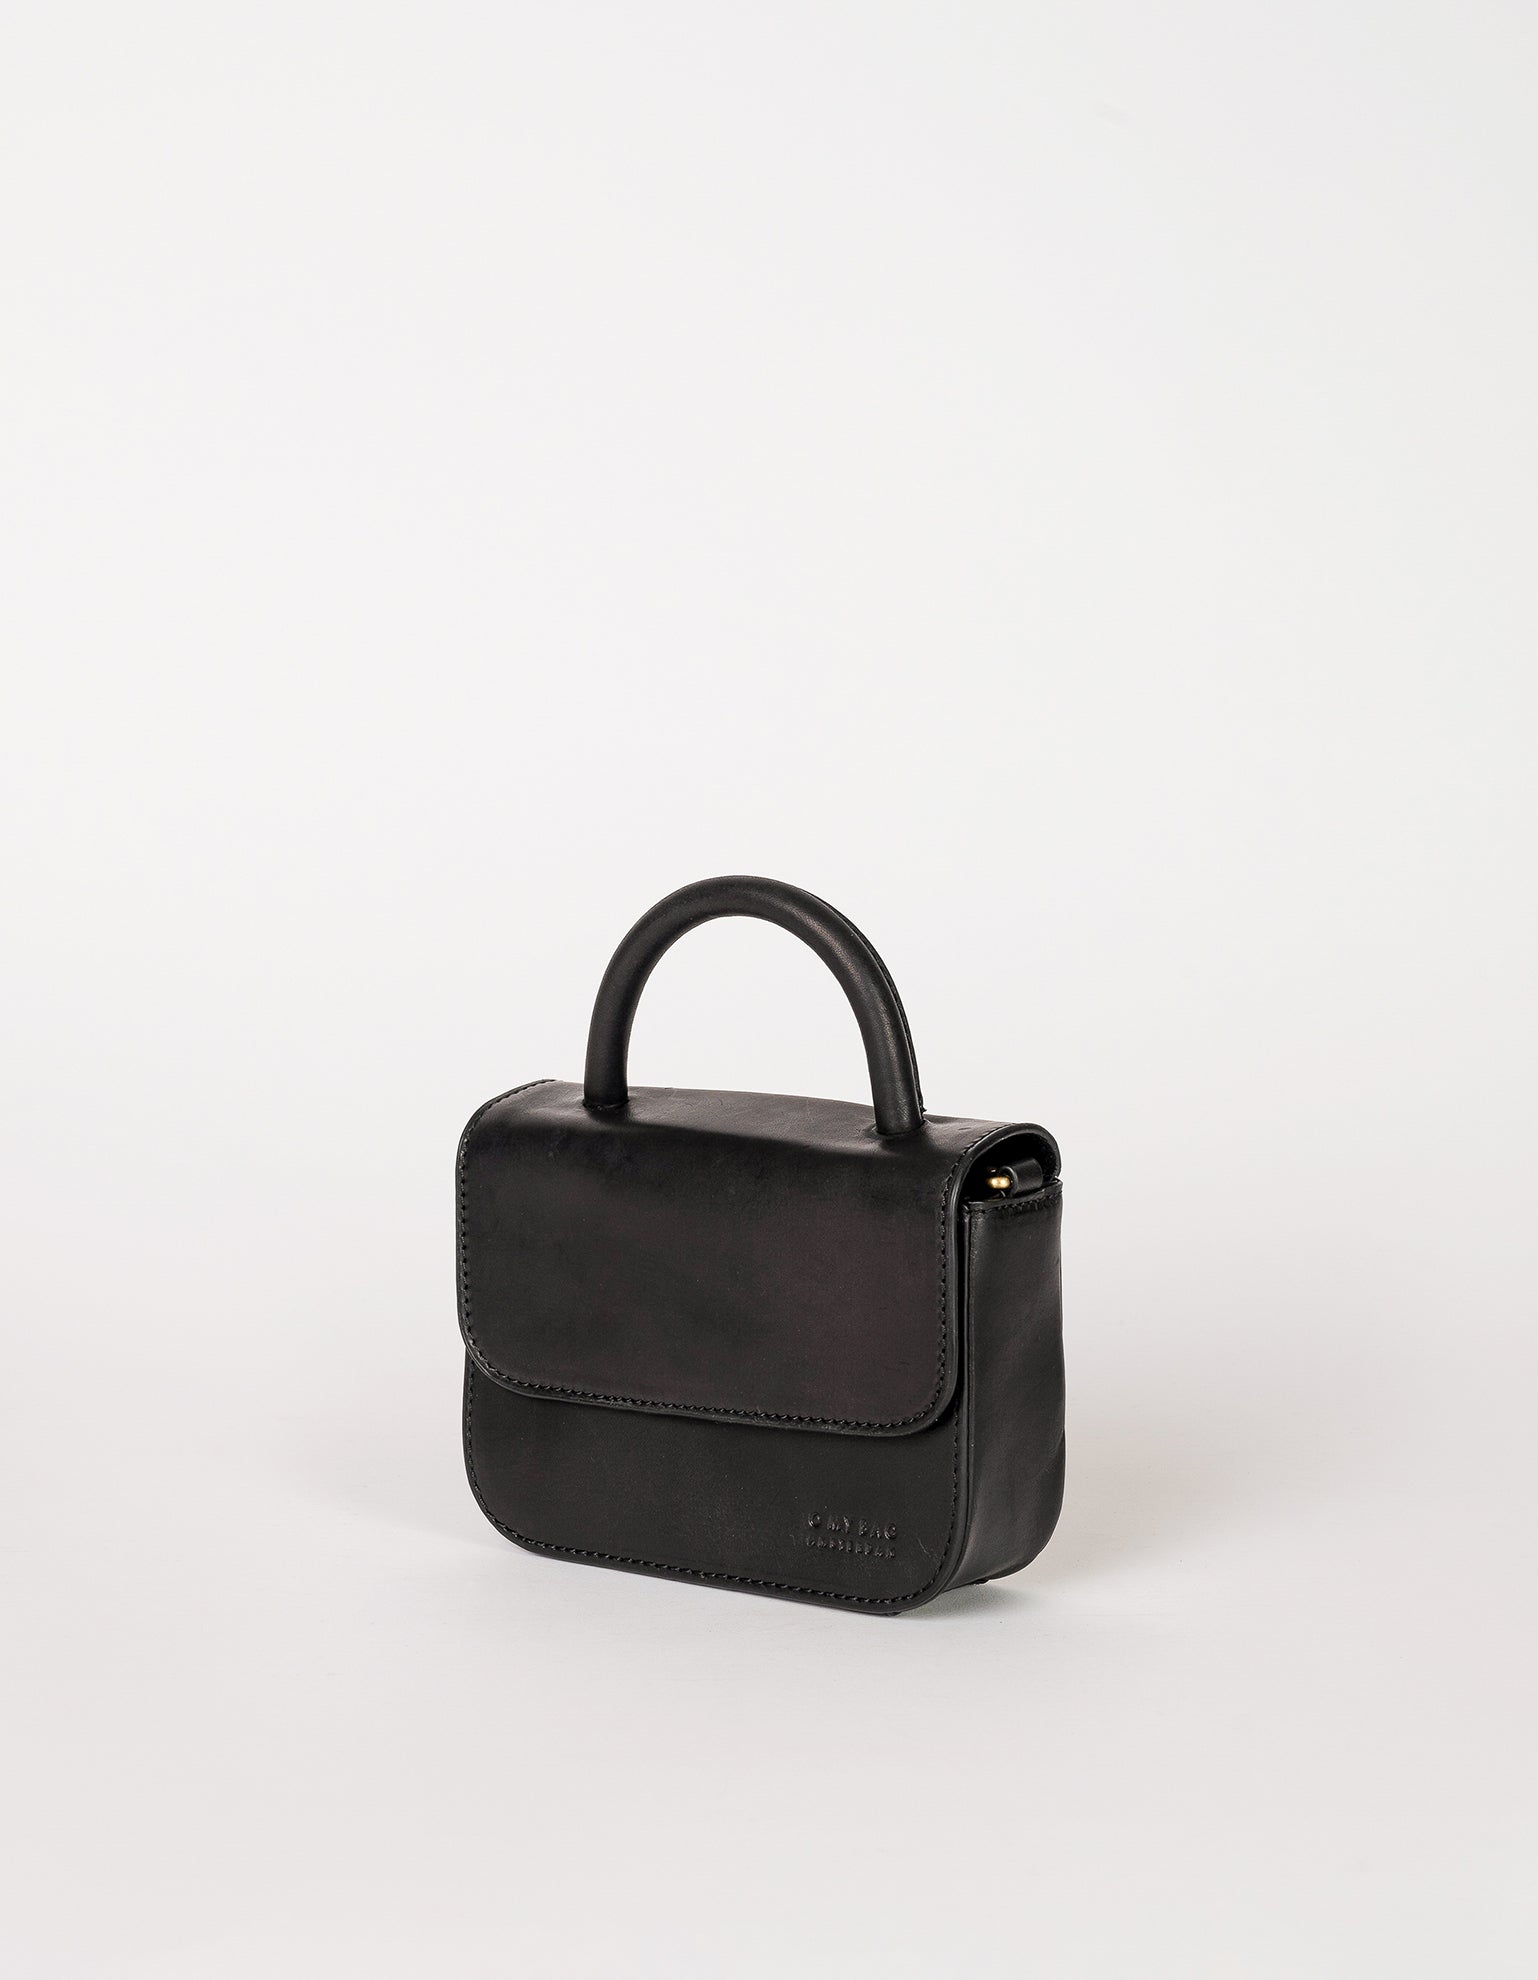 Nano Bag Black Classic Leather Side Product Image.